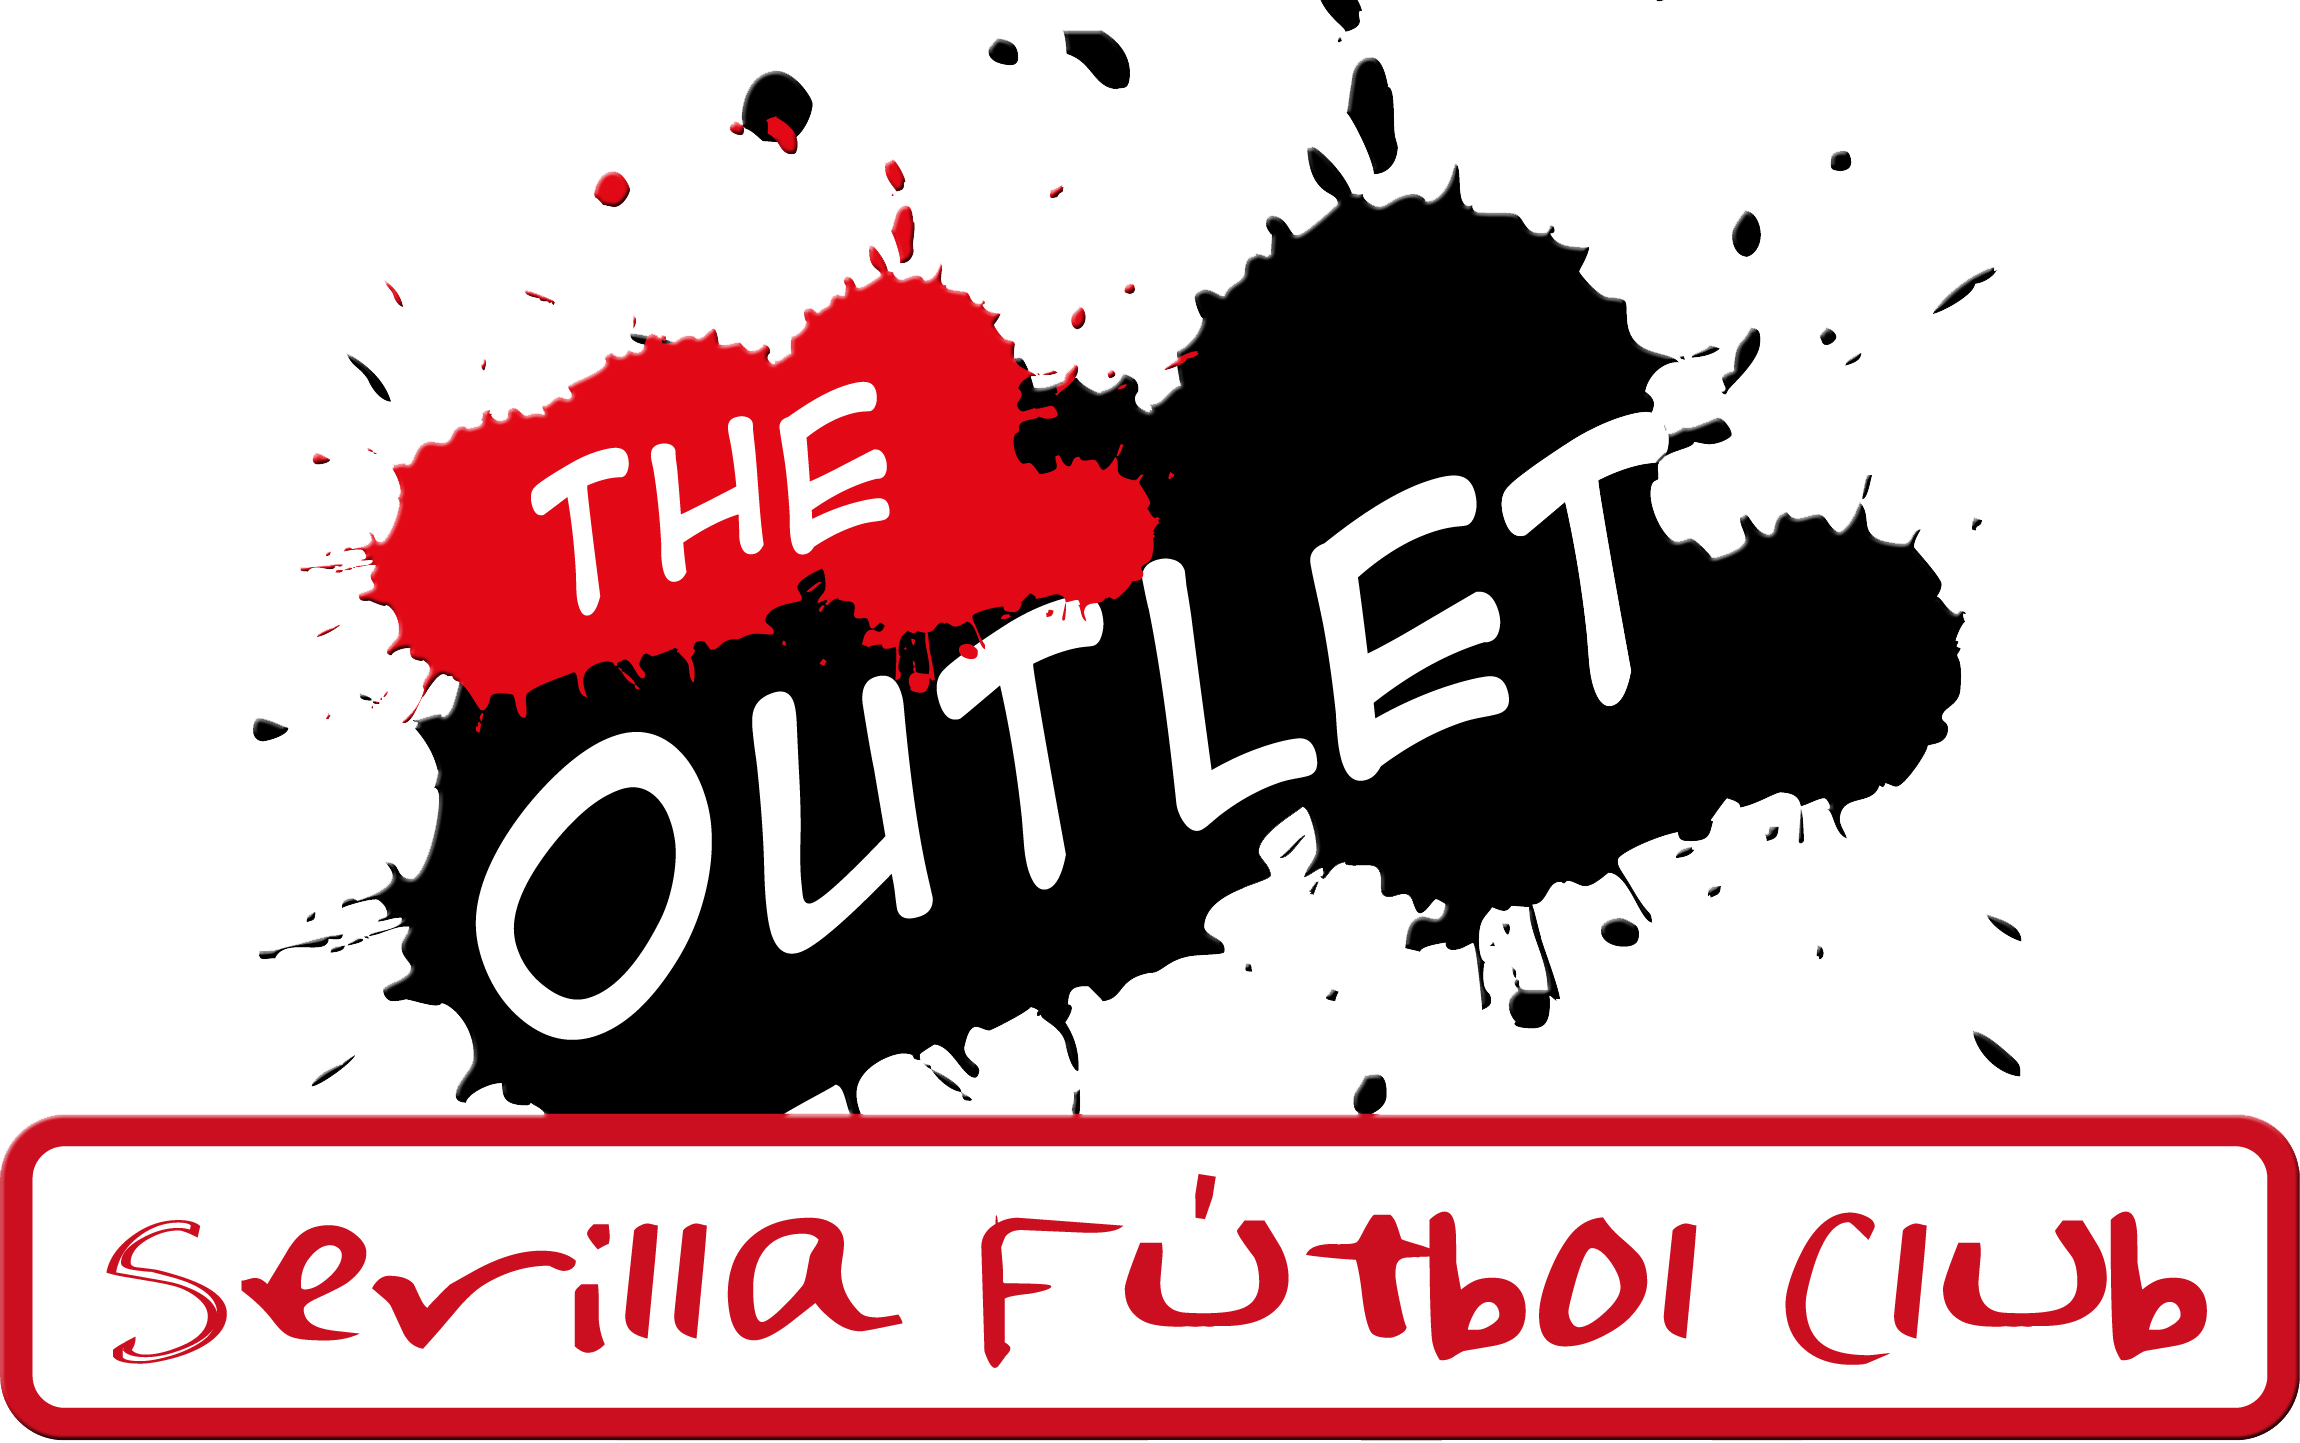 Logo Oulet 